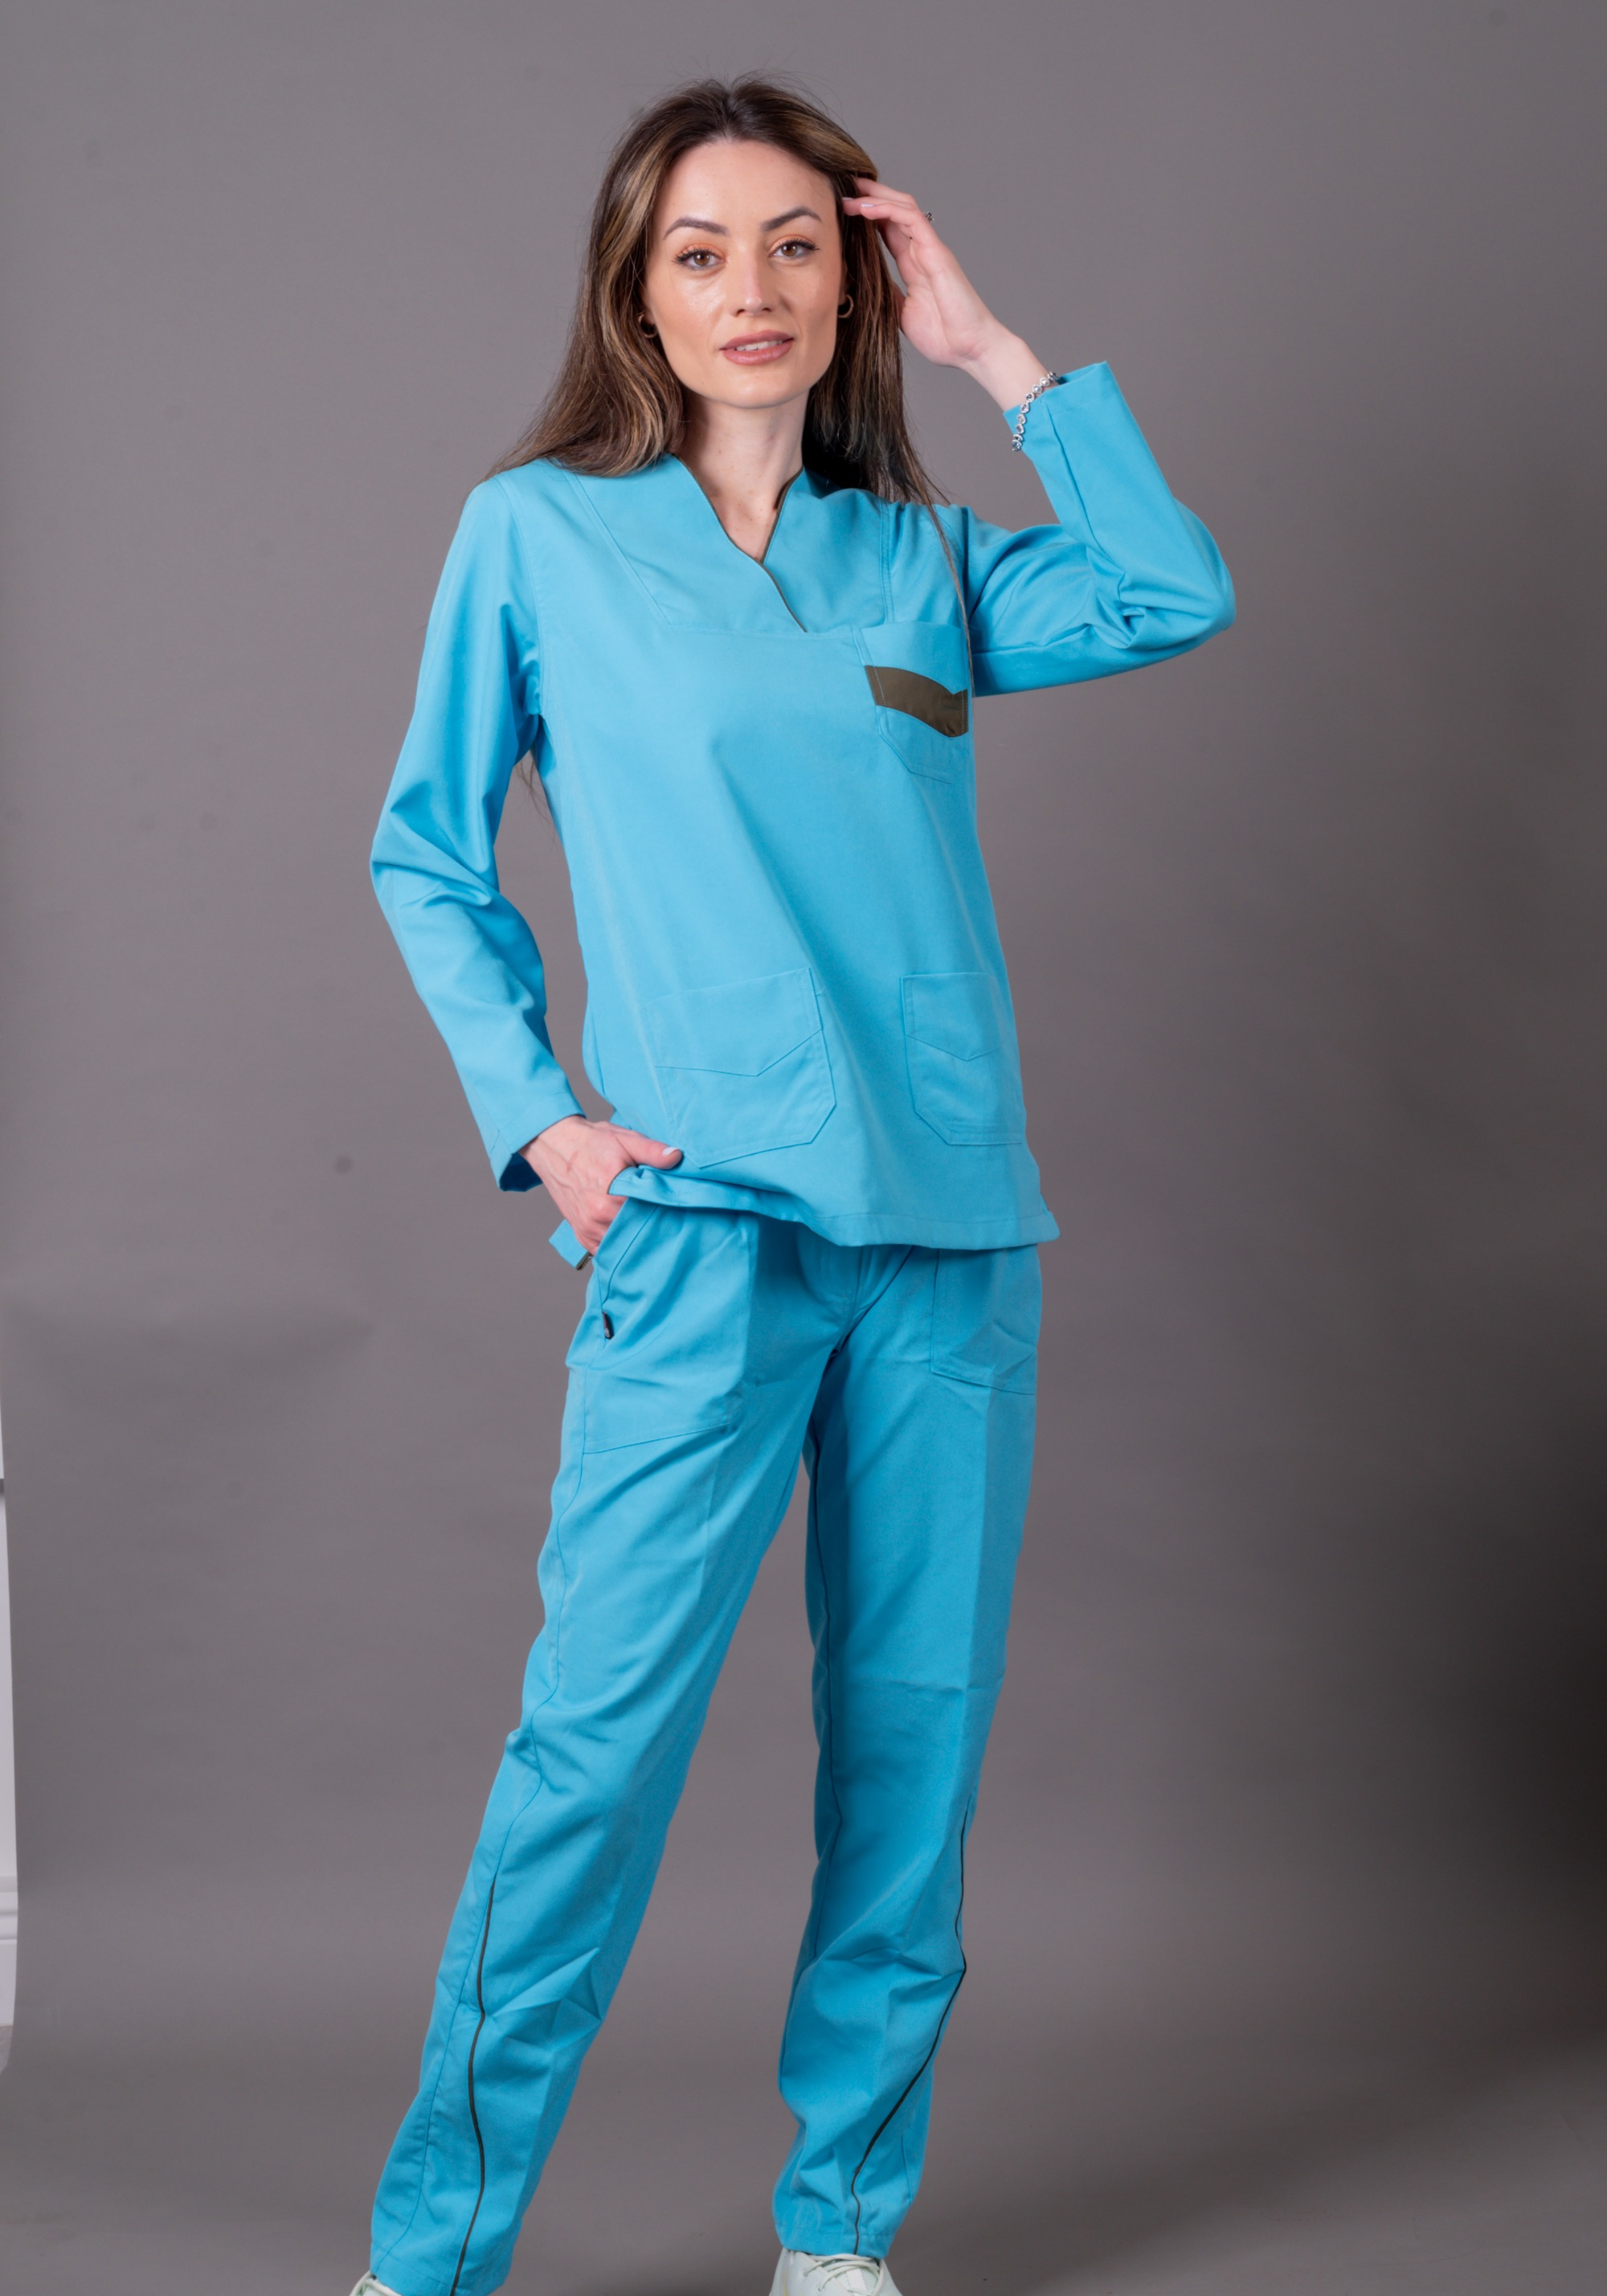 Medical Doctor Nurse Uniform, Light Blue